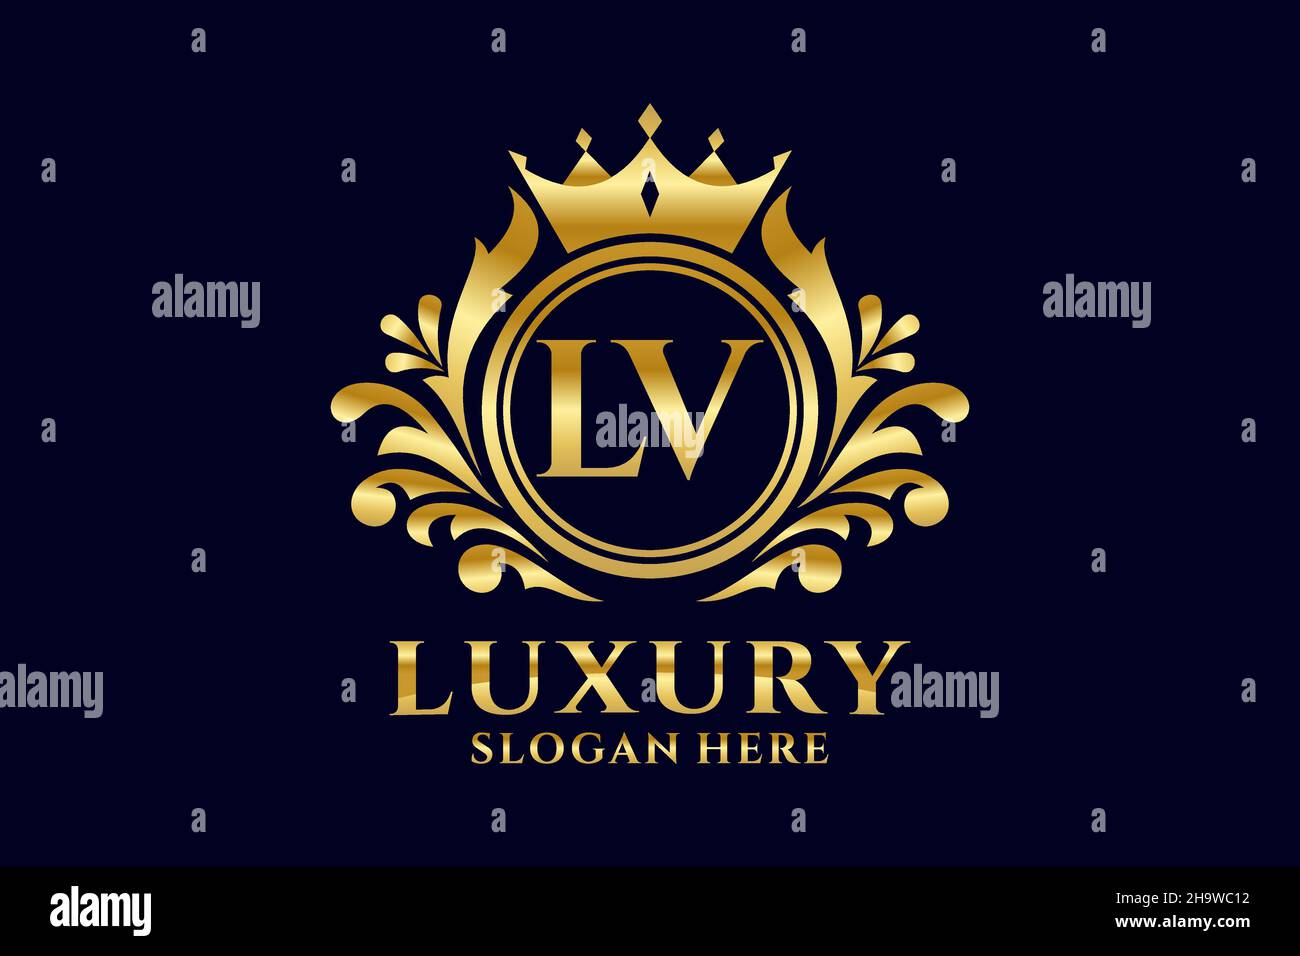 LV Letter Royal Luxury Logo template in vector art for luxurious